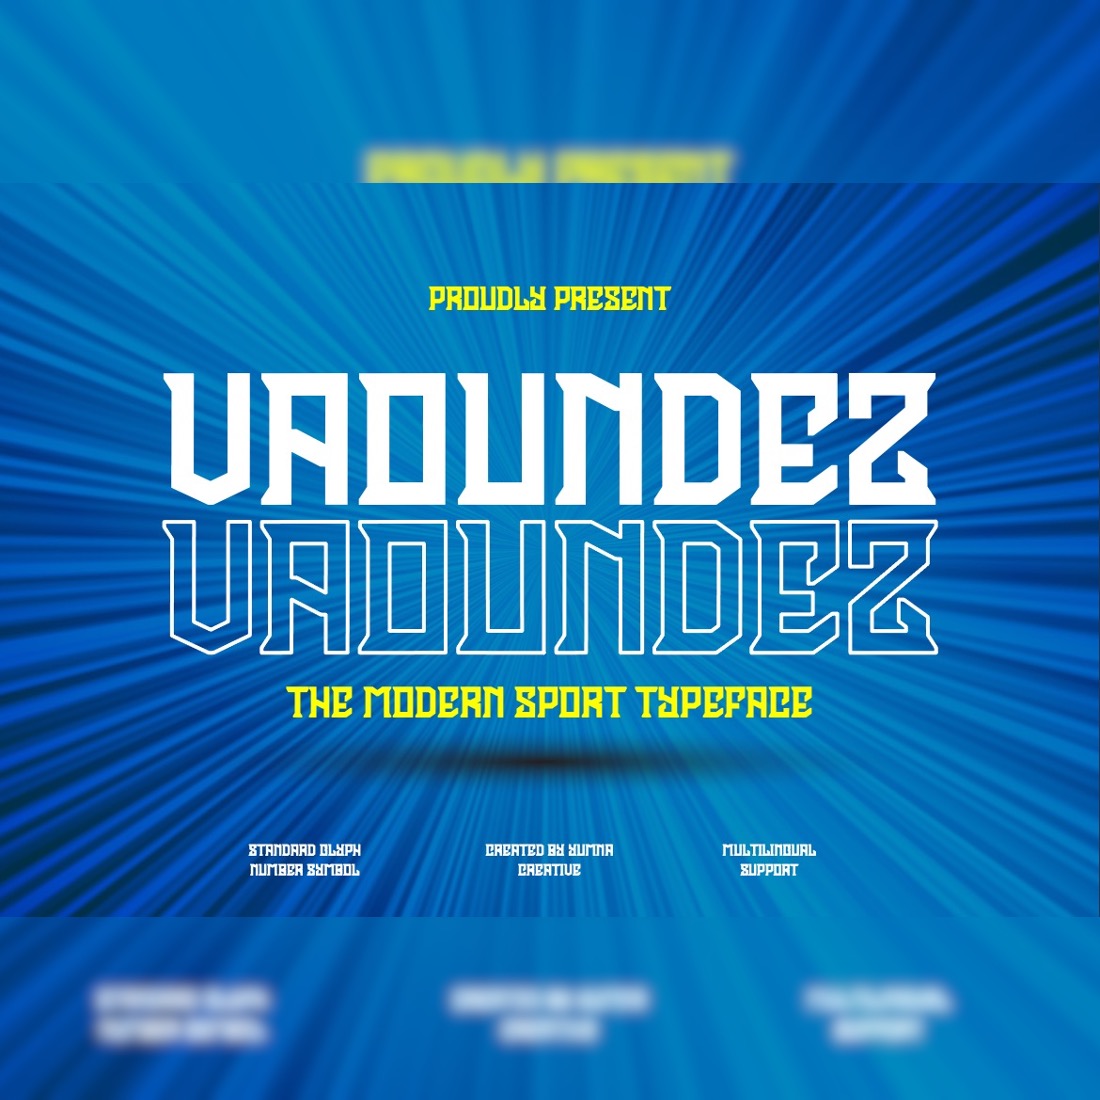 Vaoundez - Modern Sports Font cover image.